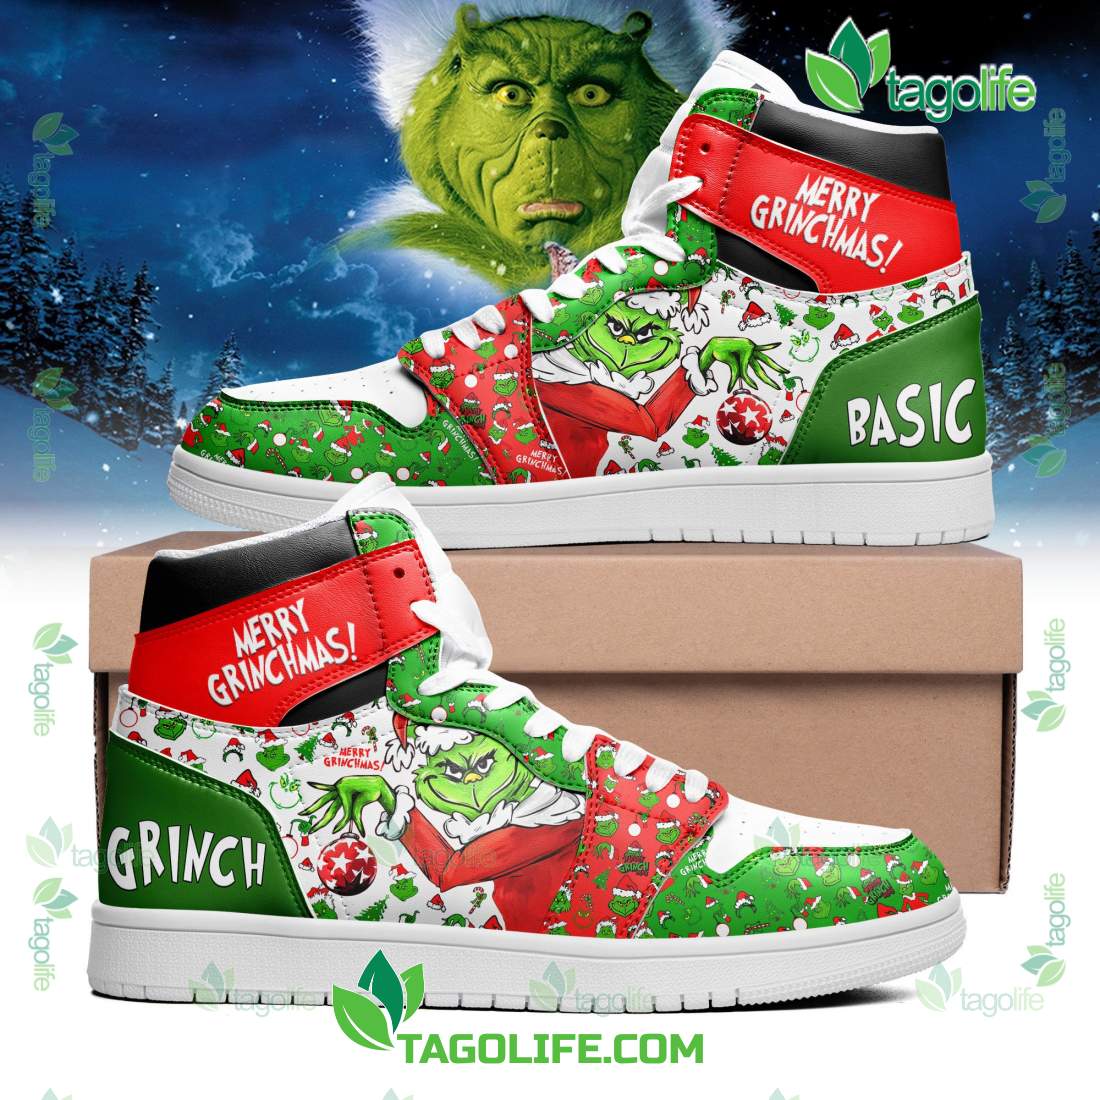 Basic Grinch Merry Grinchmas Air Jordan High Top - Tagolife